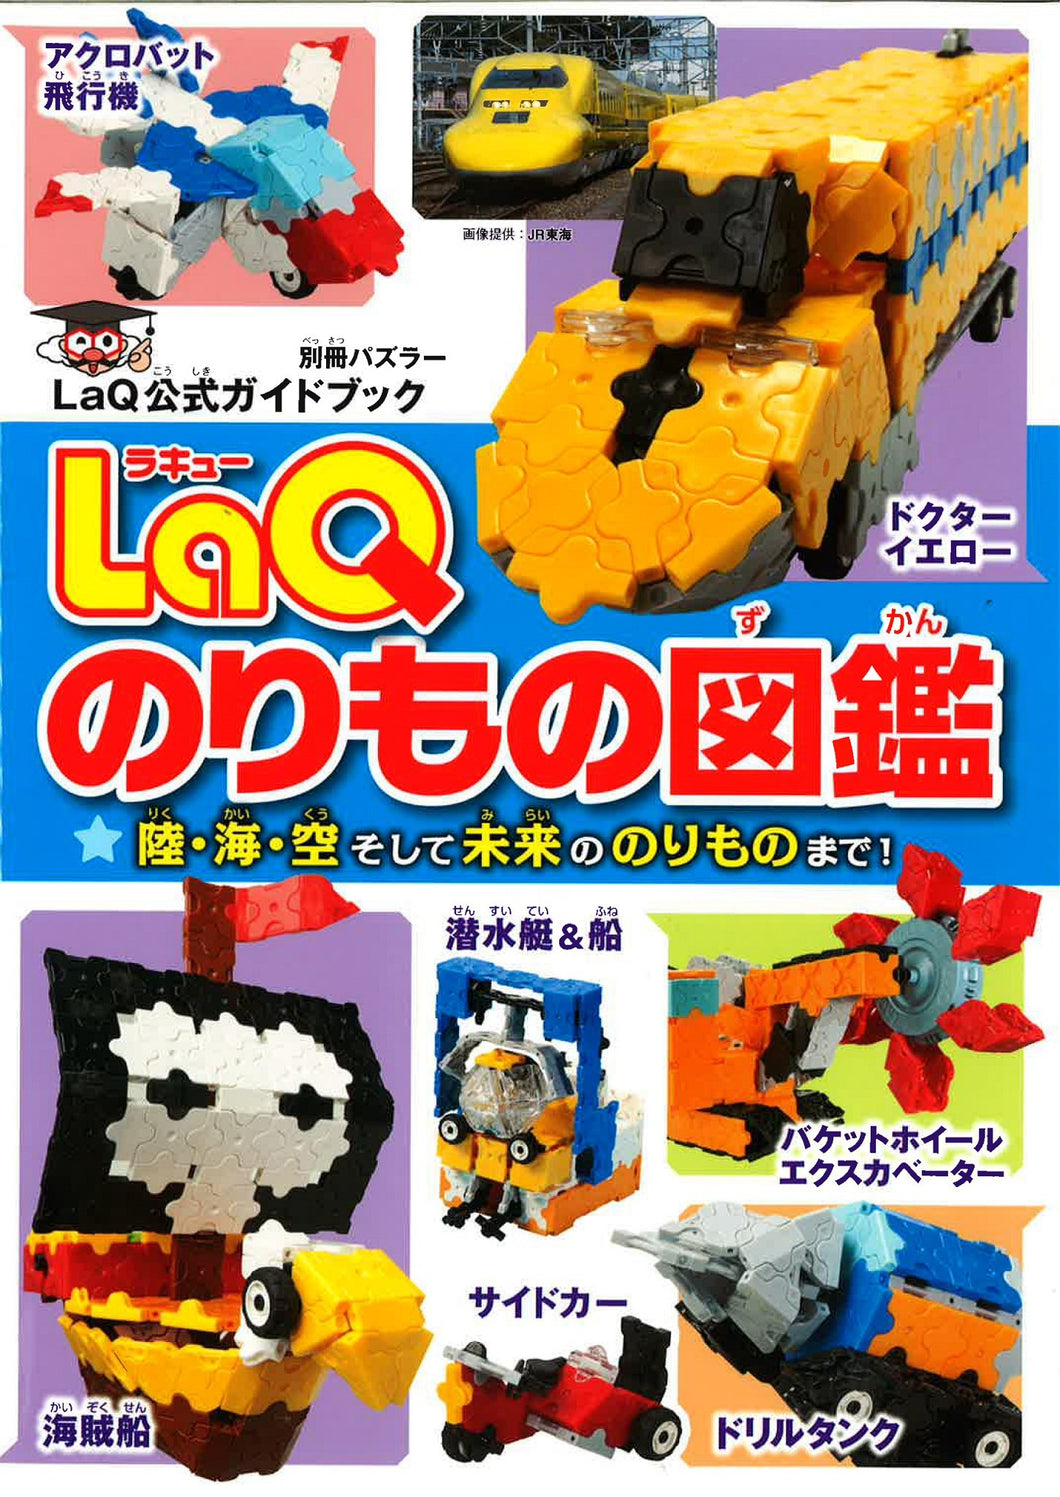 LaQ book vehicles craft